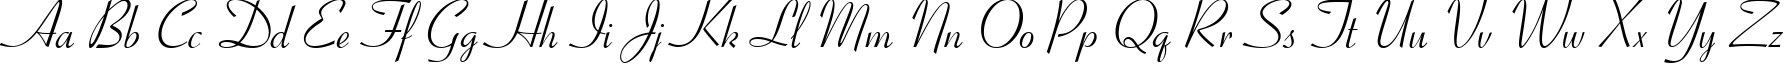 Пример написания английского алфавита шрифтом Ribbon 131 BT